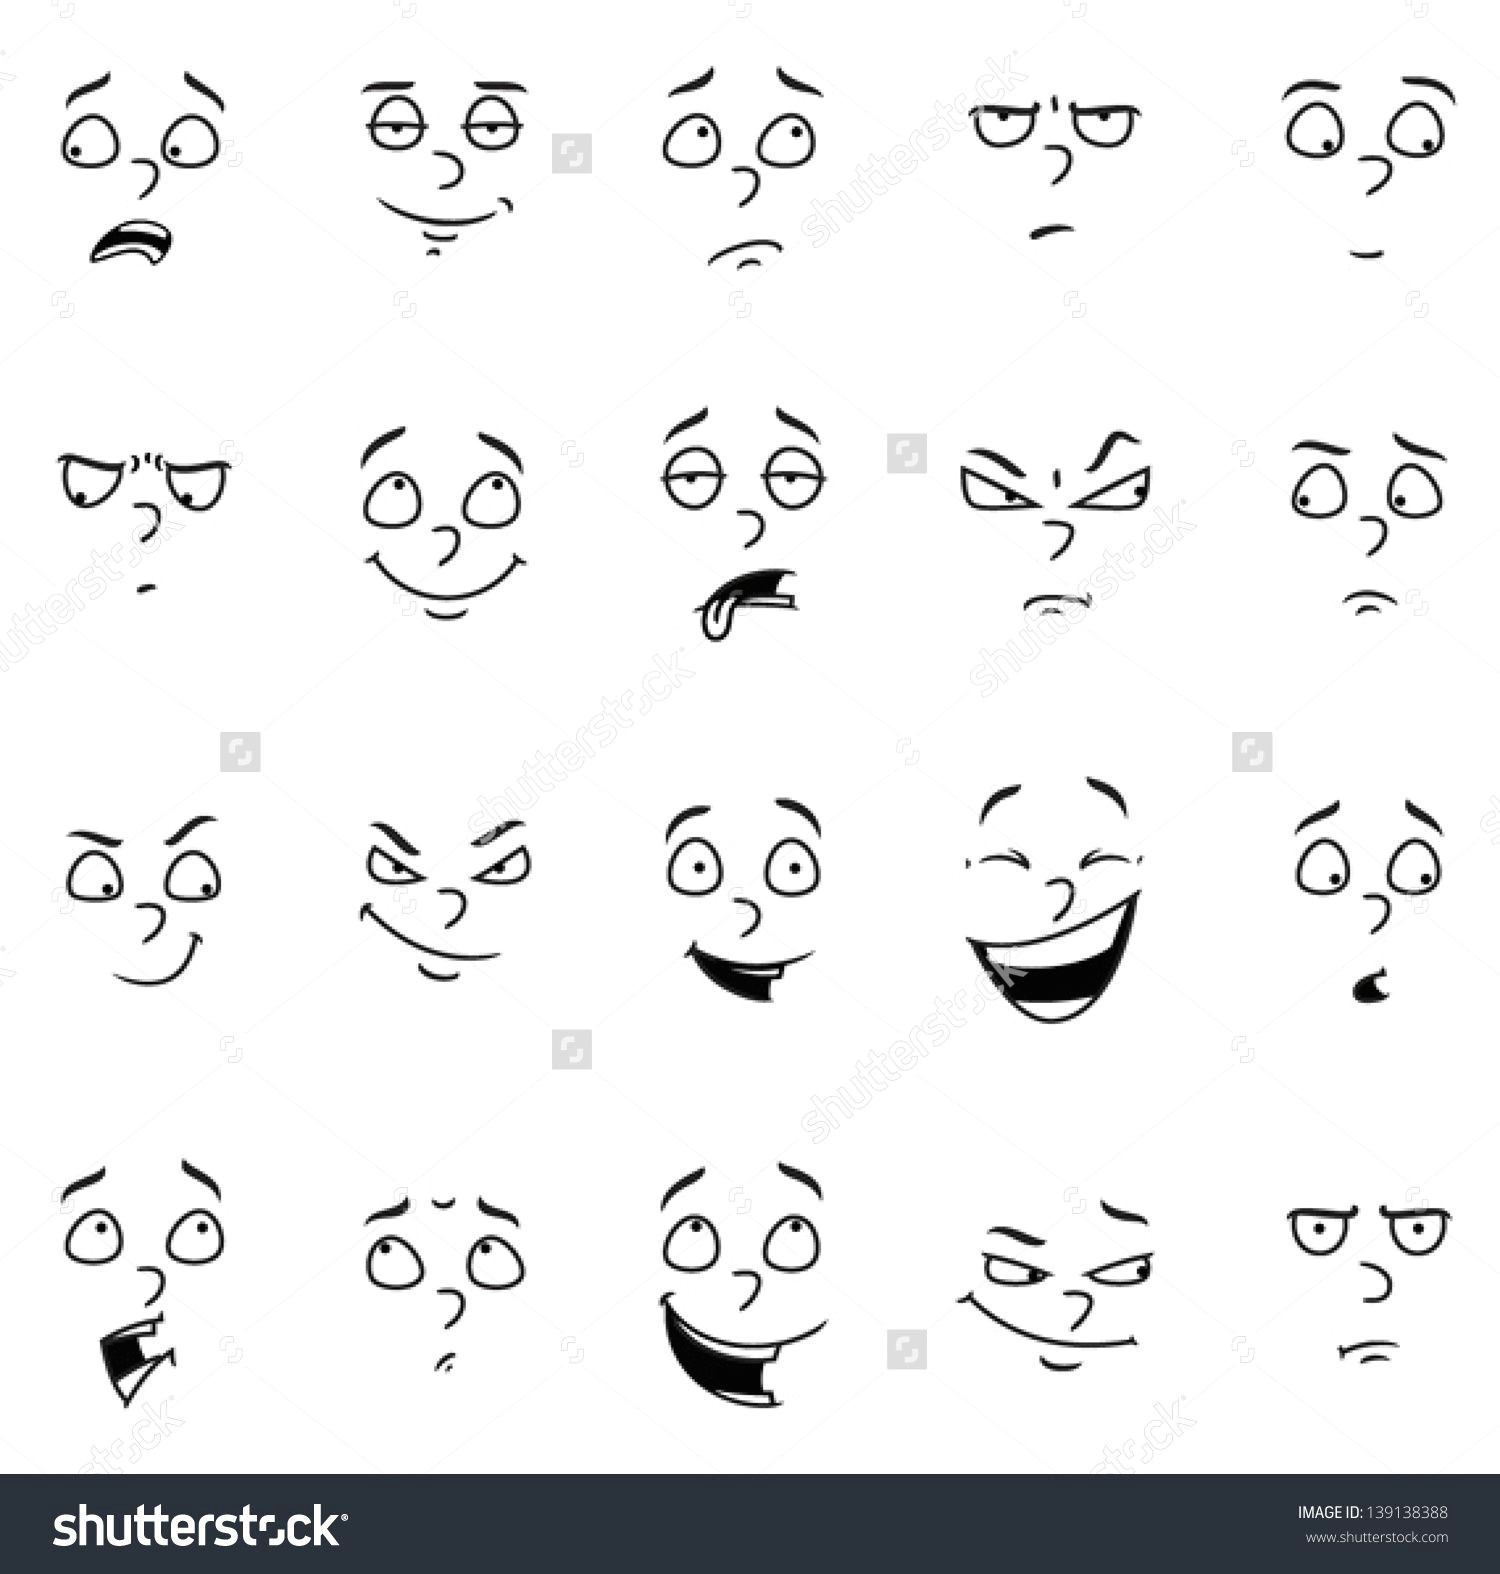 Drawing A Simple Cartoon Face Simple Woman Cartoon Facial Expressions Buscar Con Google Art